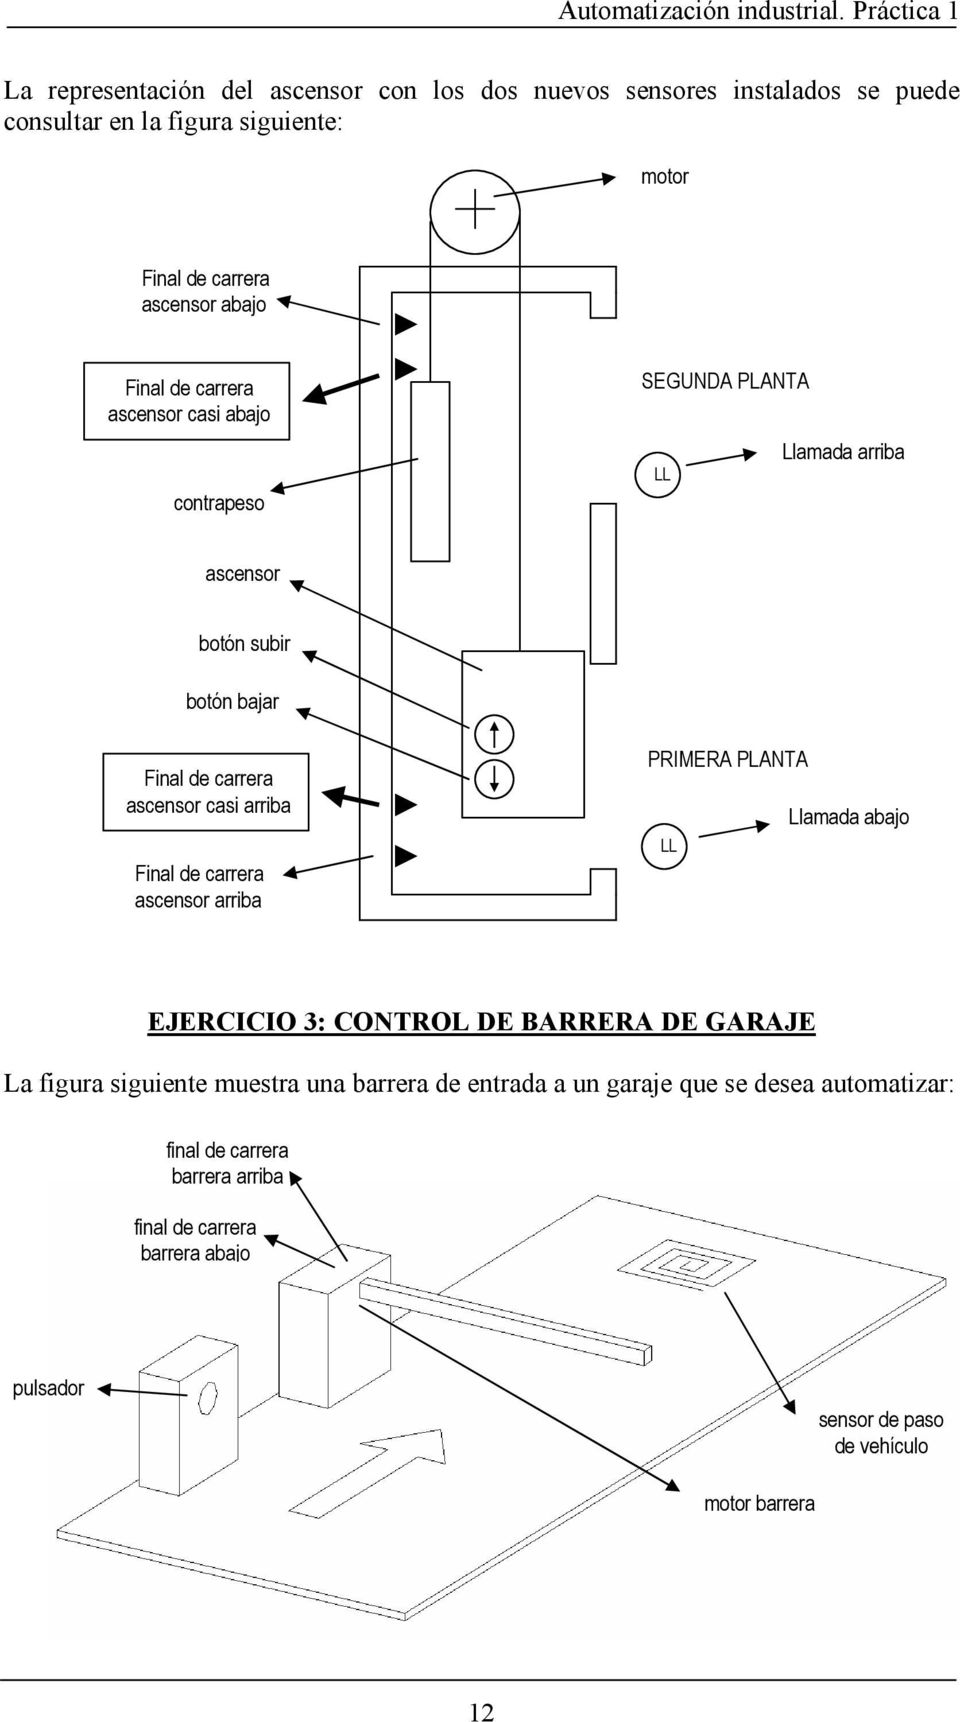 Final de carrera ascensor arriba PRIMERA PLANTA LL Llamada abajo EJERCICIO 3: CONTROL DE BARRERA DE GARAJE La figura siguiente muestra una barrera de